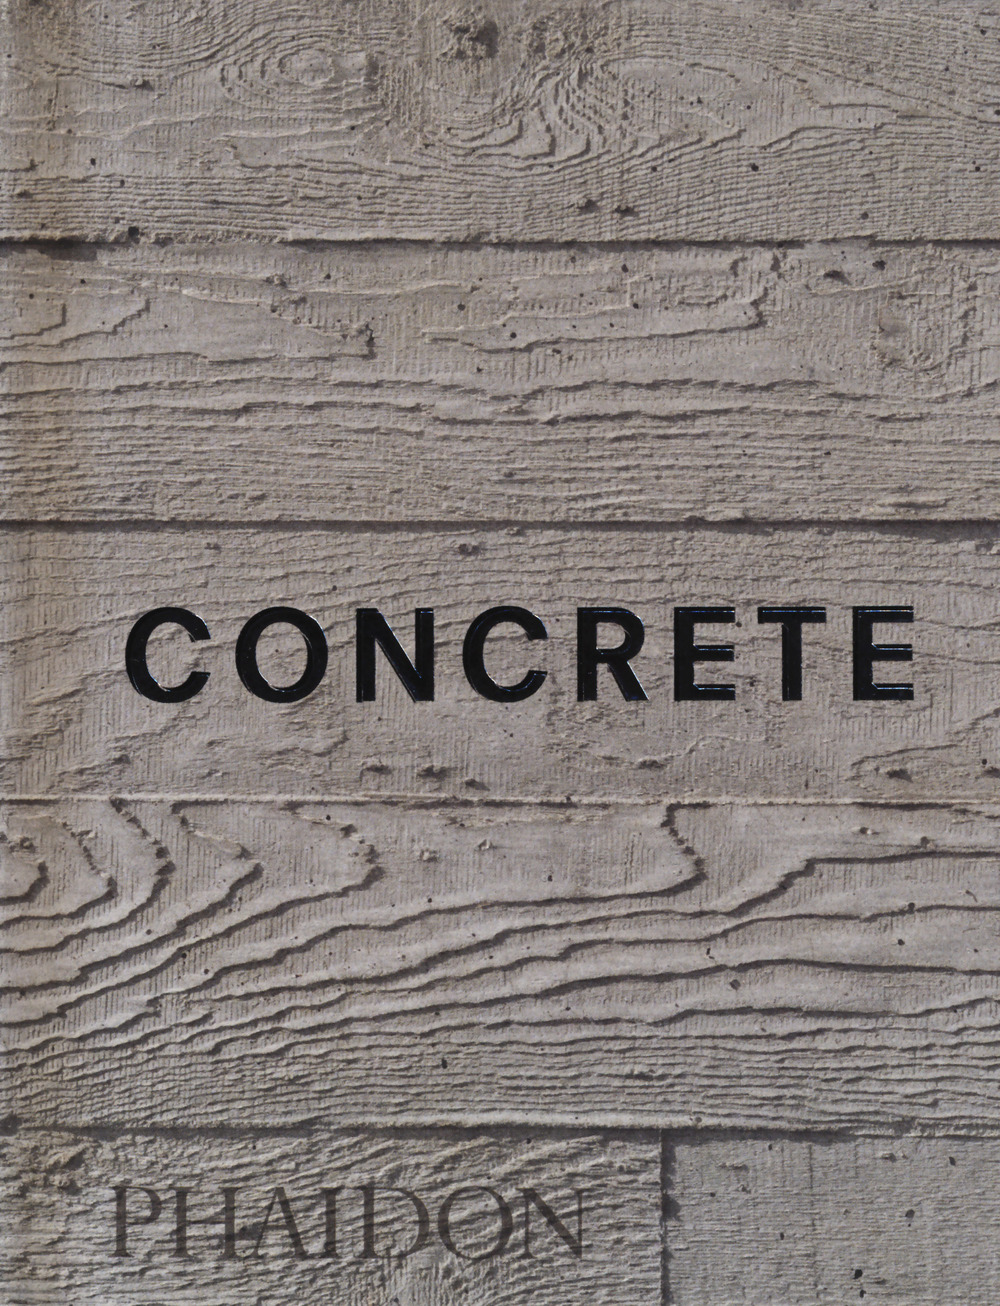 Concrete. Ediz. illustrata